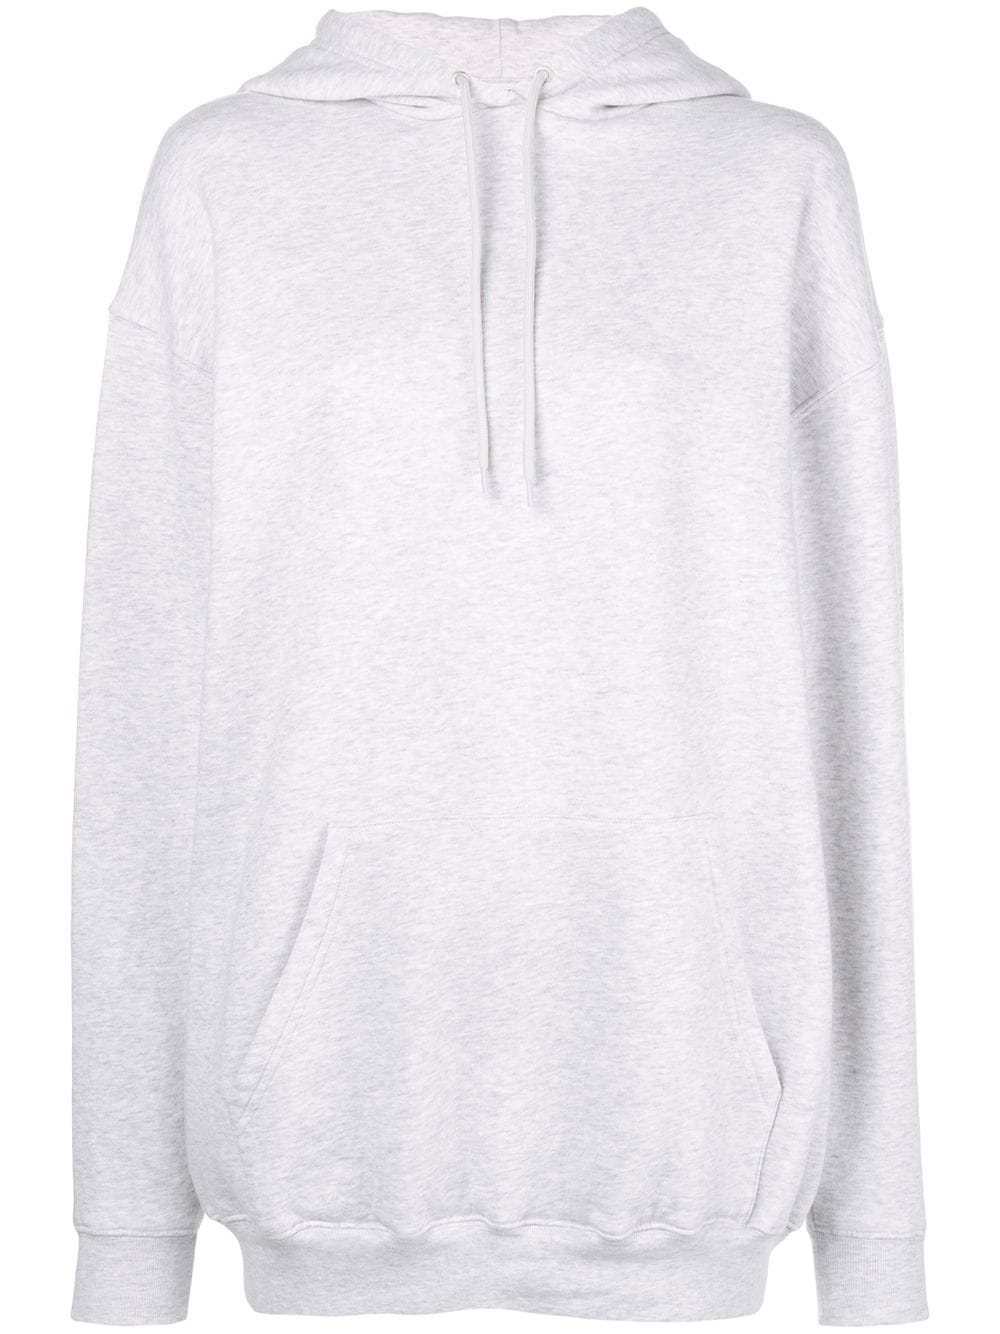 Hood Clothing Logo - Balenciaga logo hood hoodie $895 - Shop SS19 Online - Fast Delivery ...